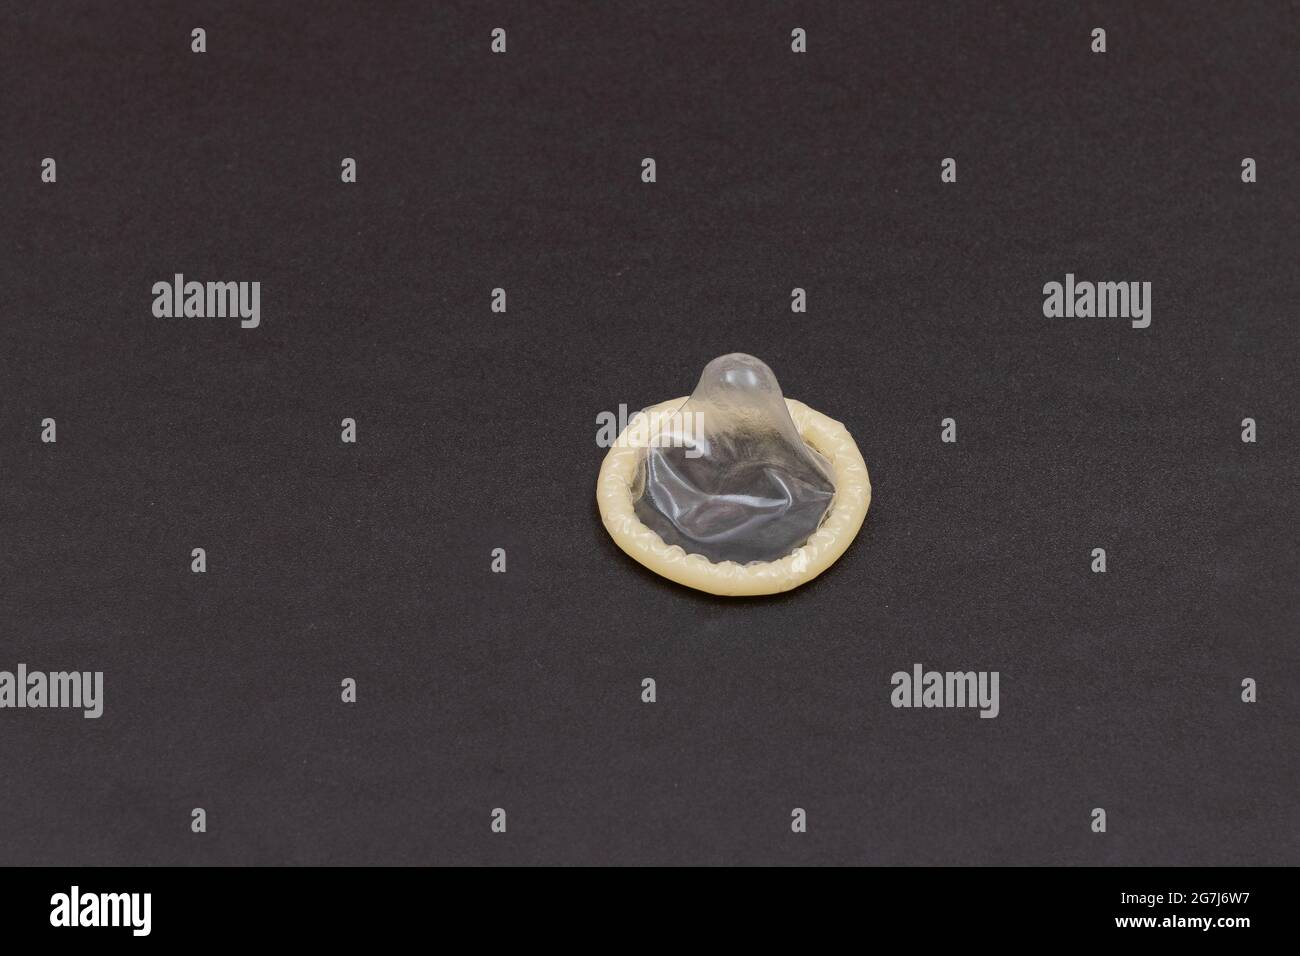 Unpacked Latex Condom On Black Background Stock Photo